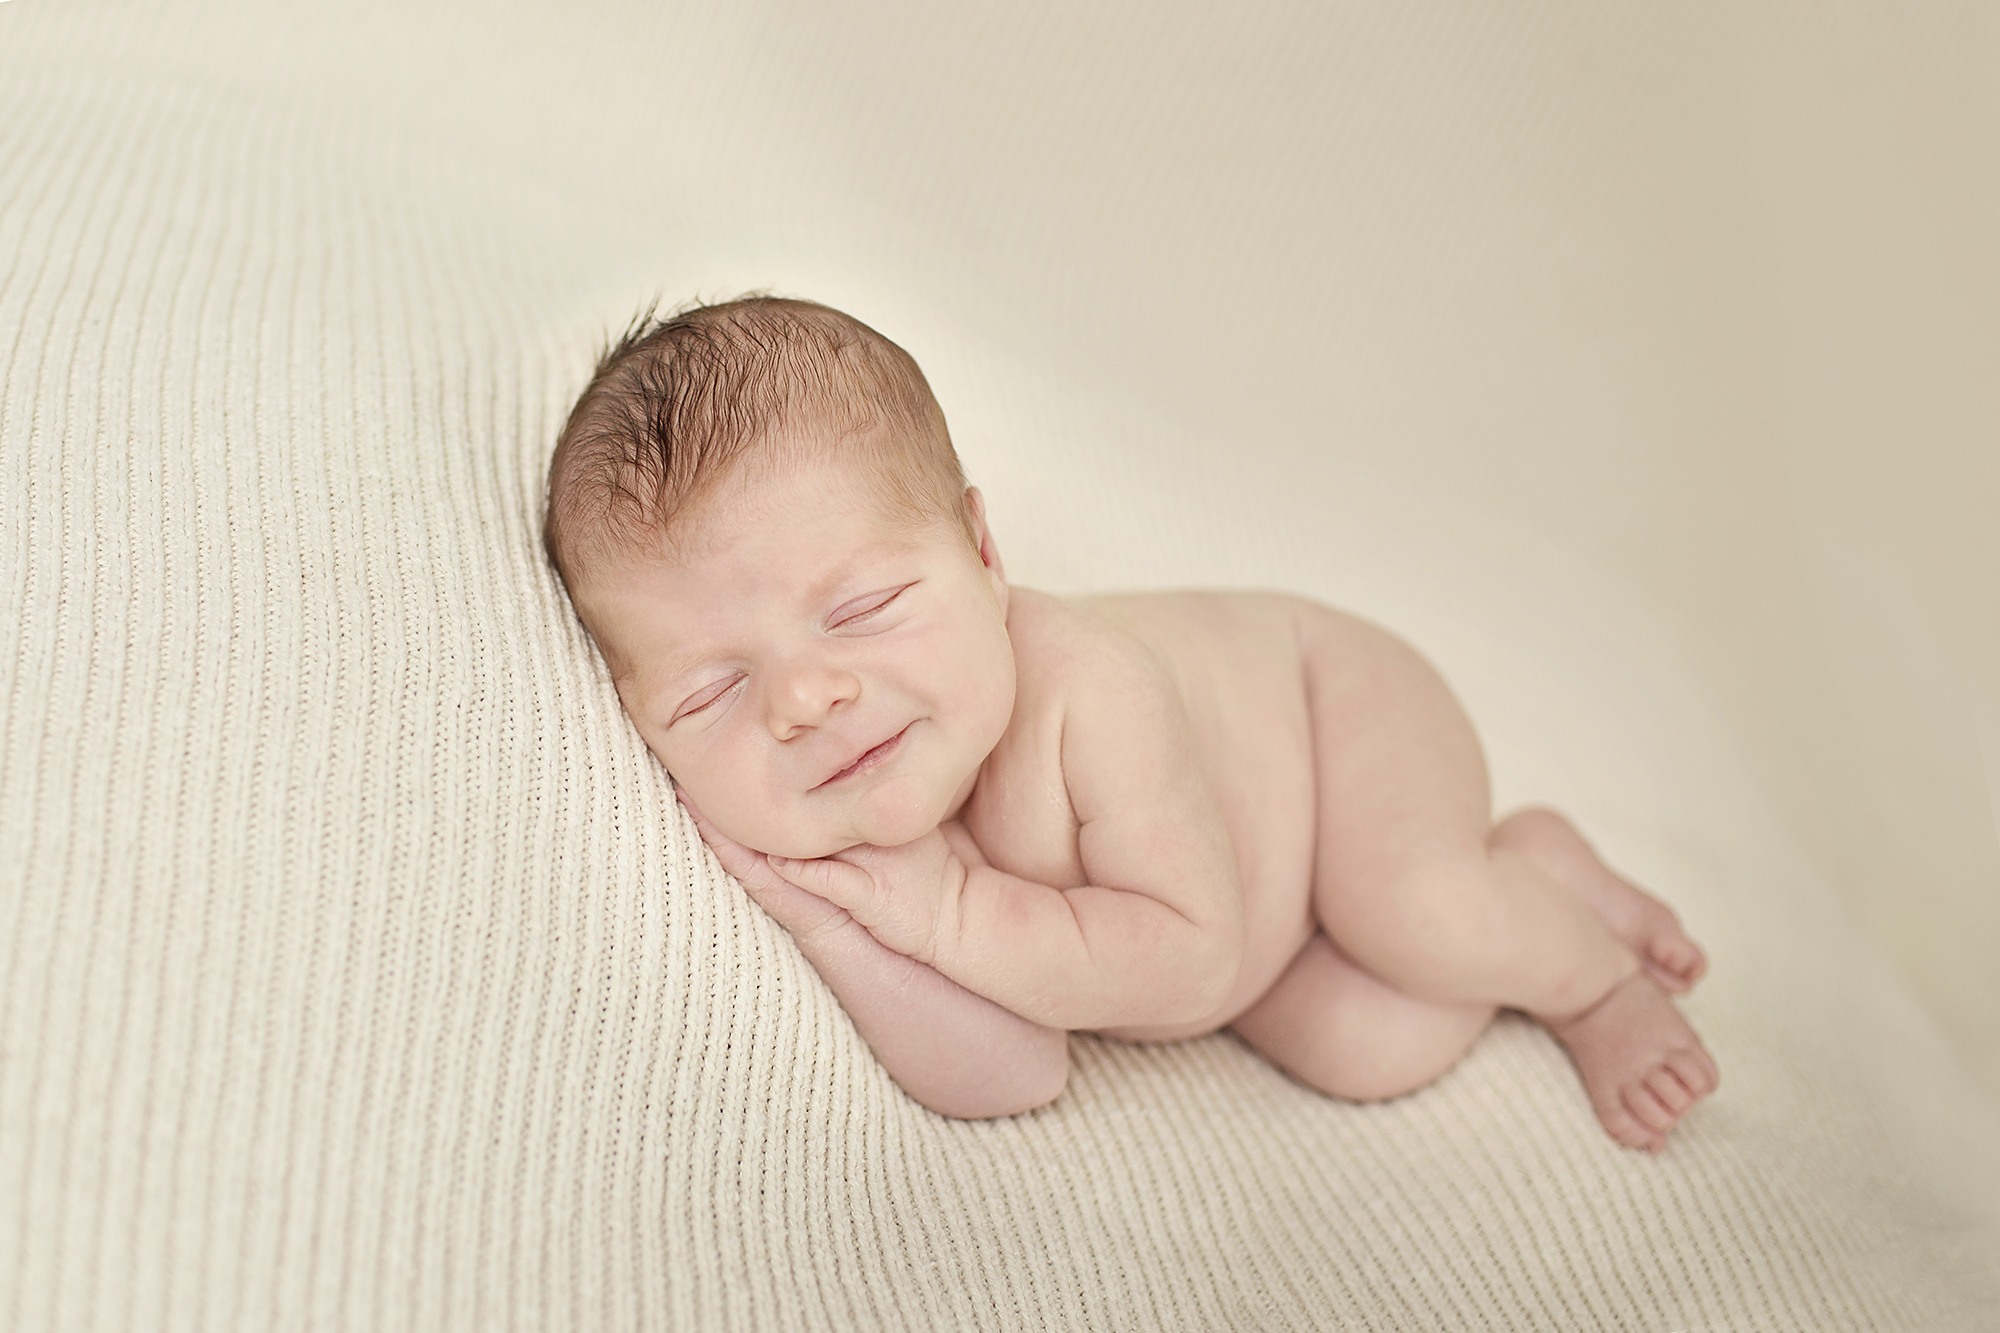 syracuse NY newborn photographer